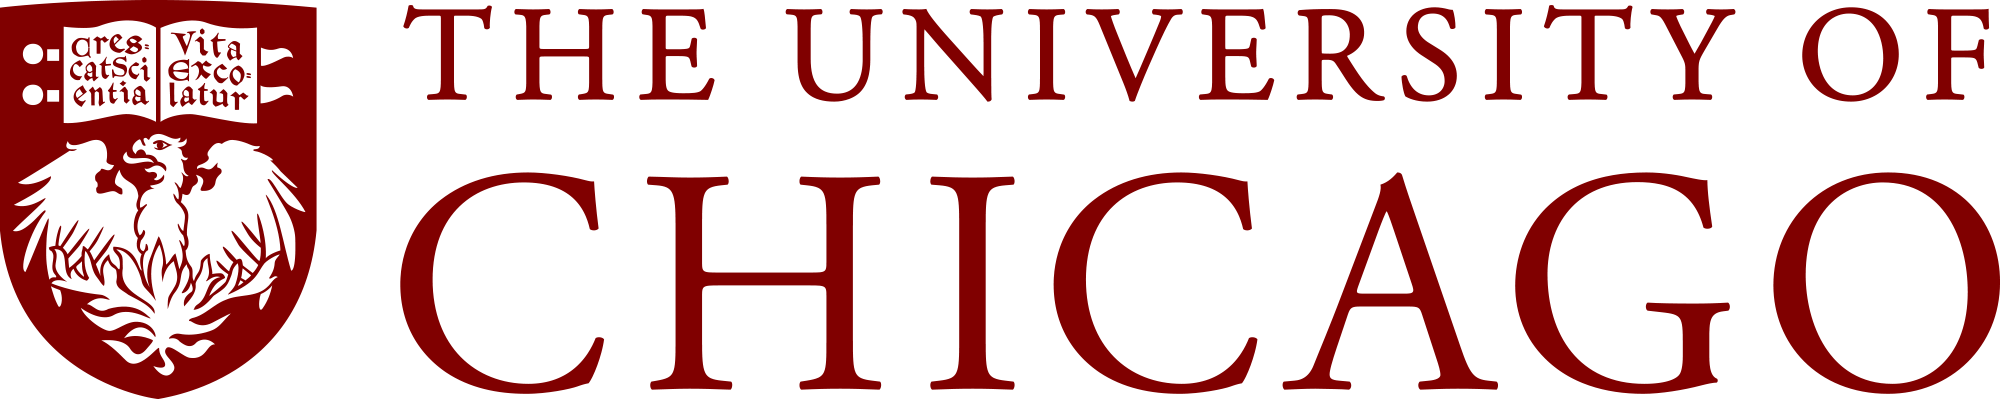 Civic Engagement University of Chicago (Copy)